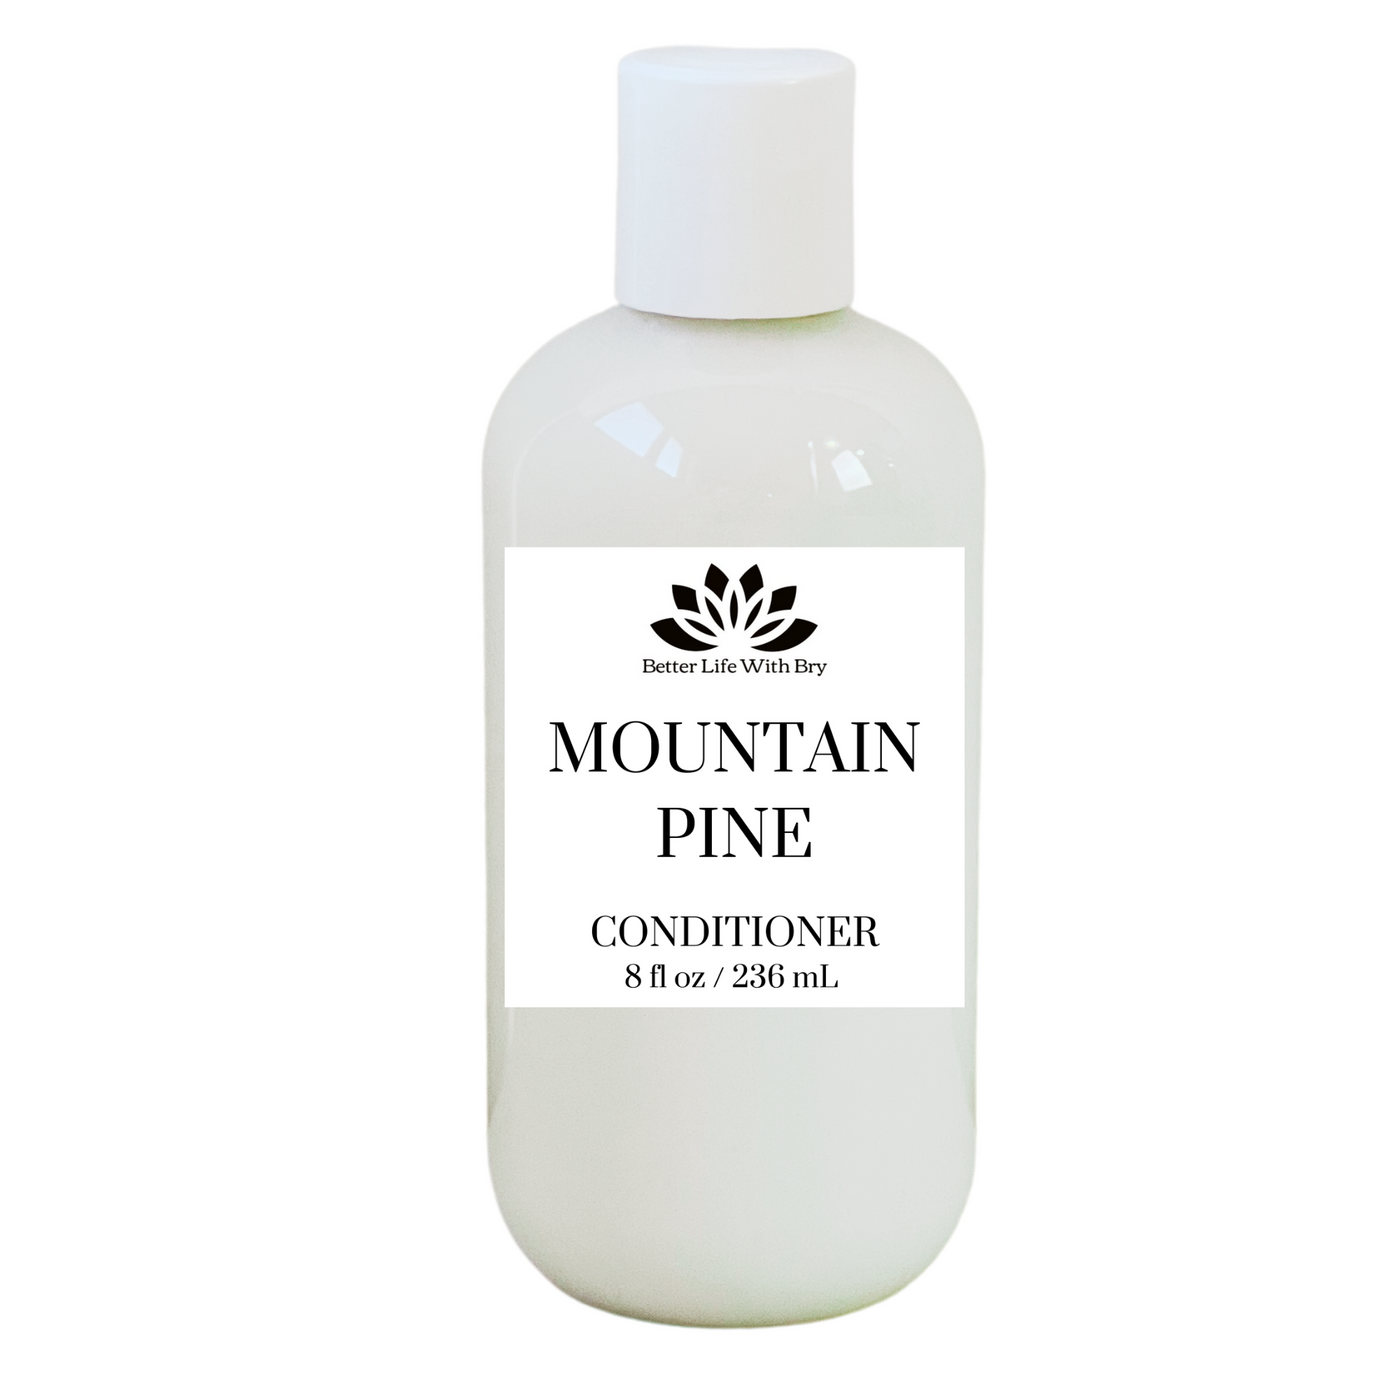 Mountain Pine Conditioner